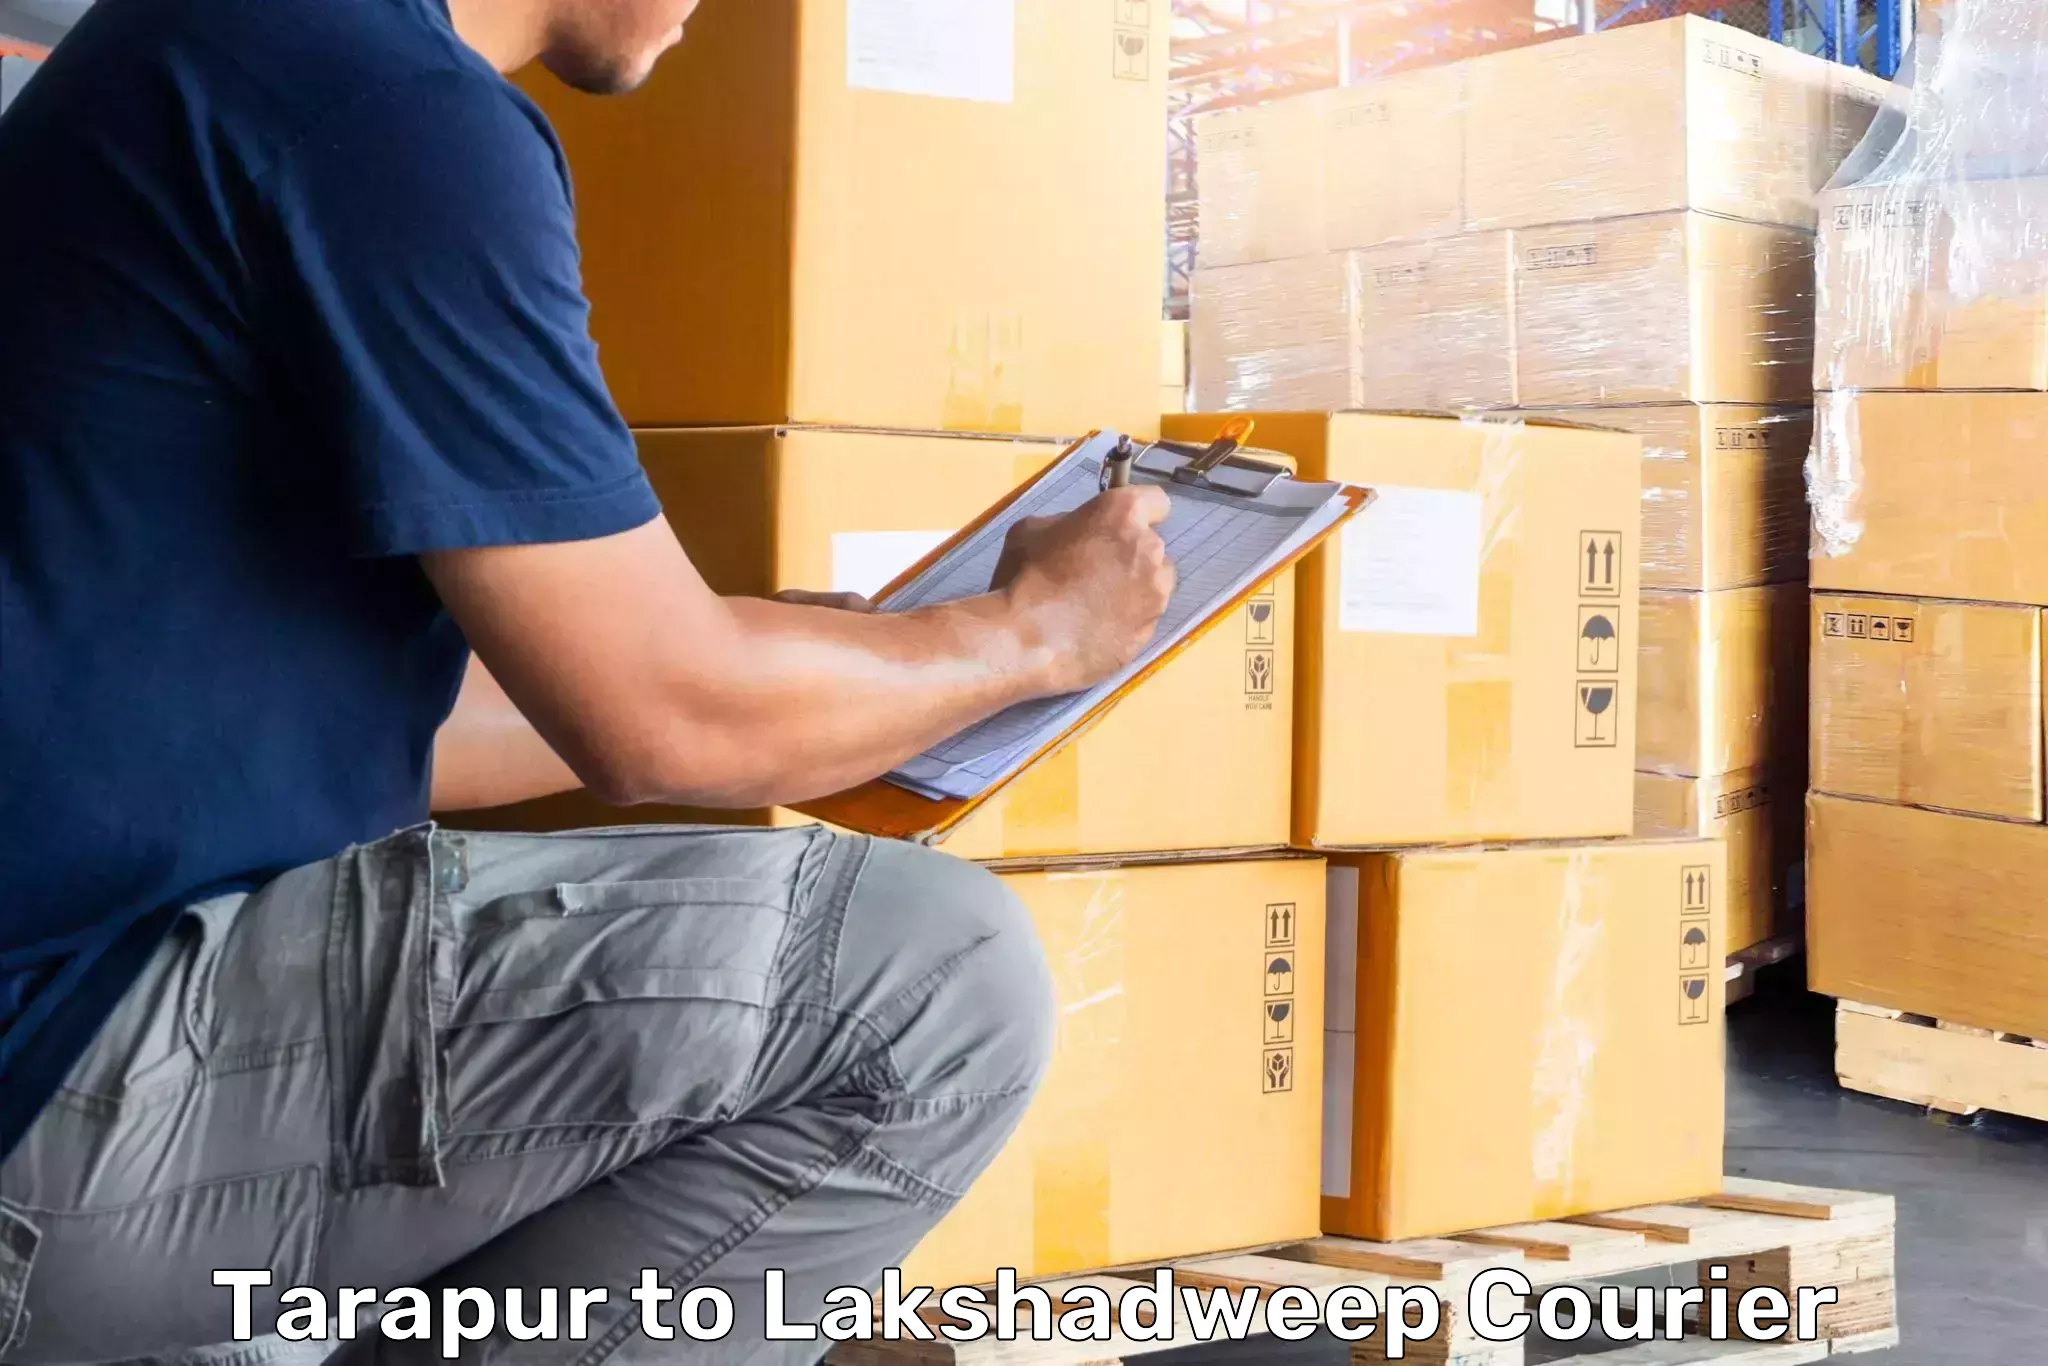 Luggage transport company Tarapur to Lakshadweep